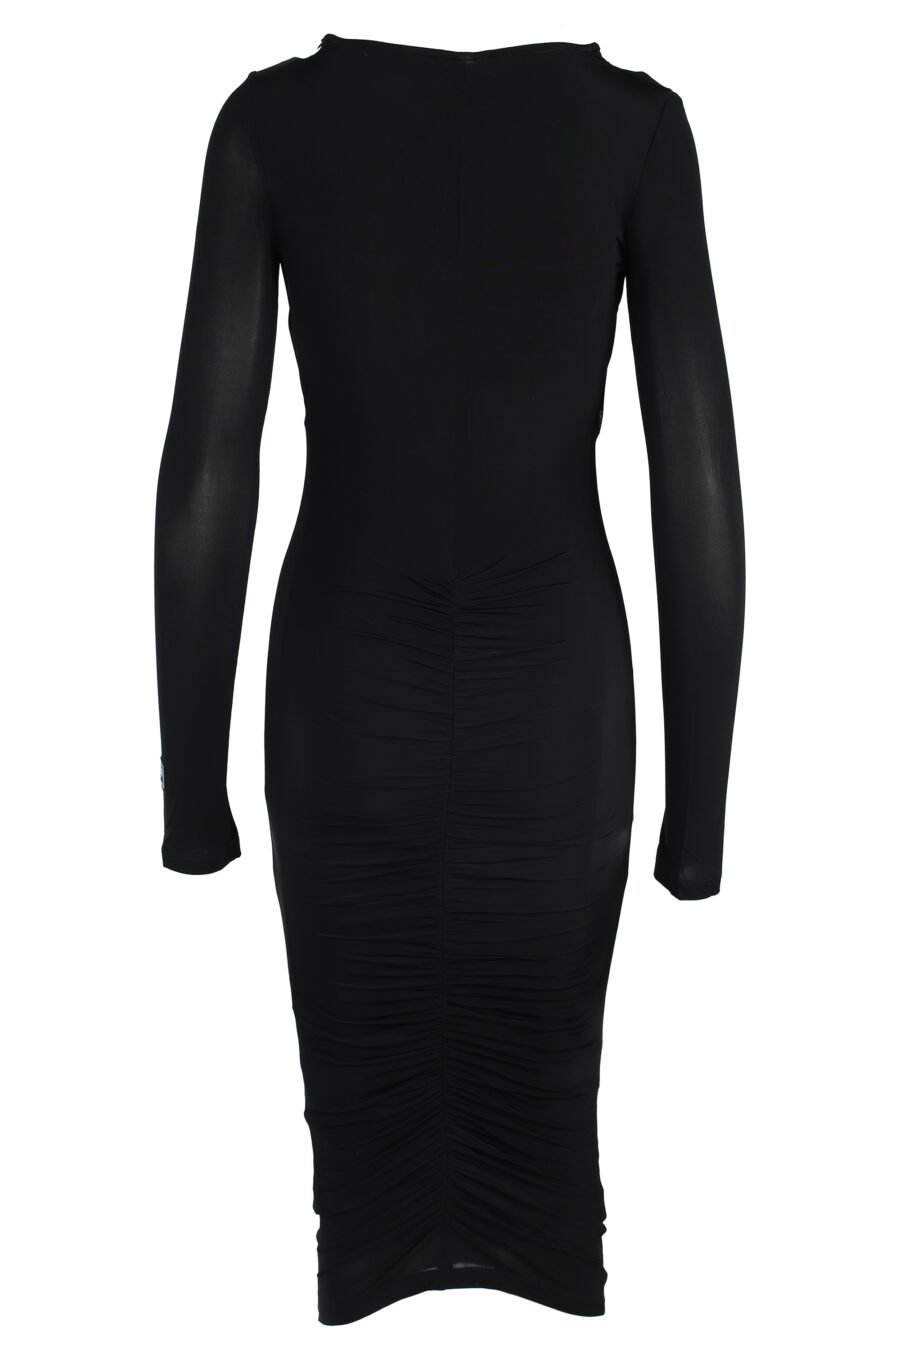 Vestido negro manga larga con detalles en transparencia - IMG 4876